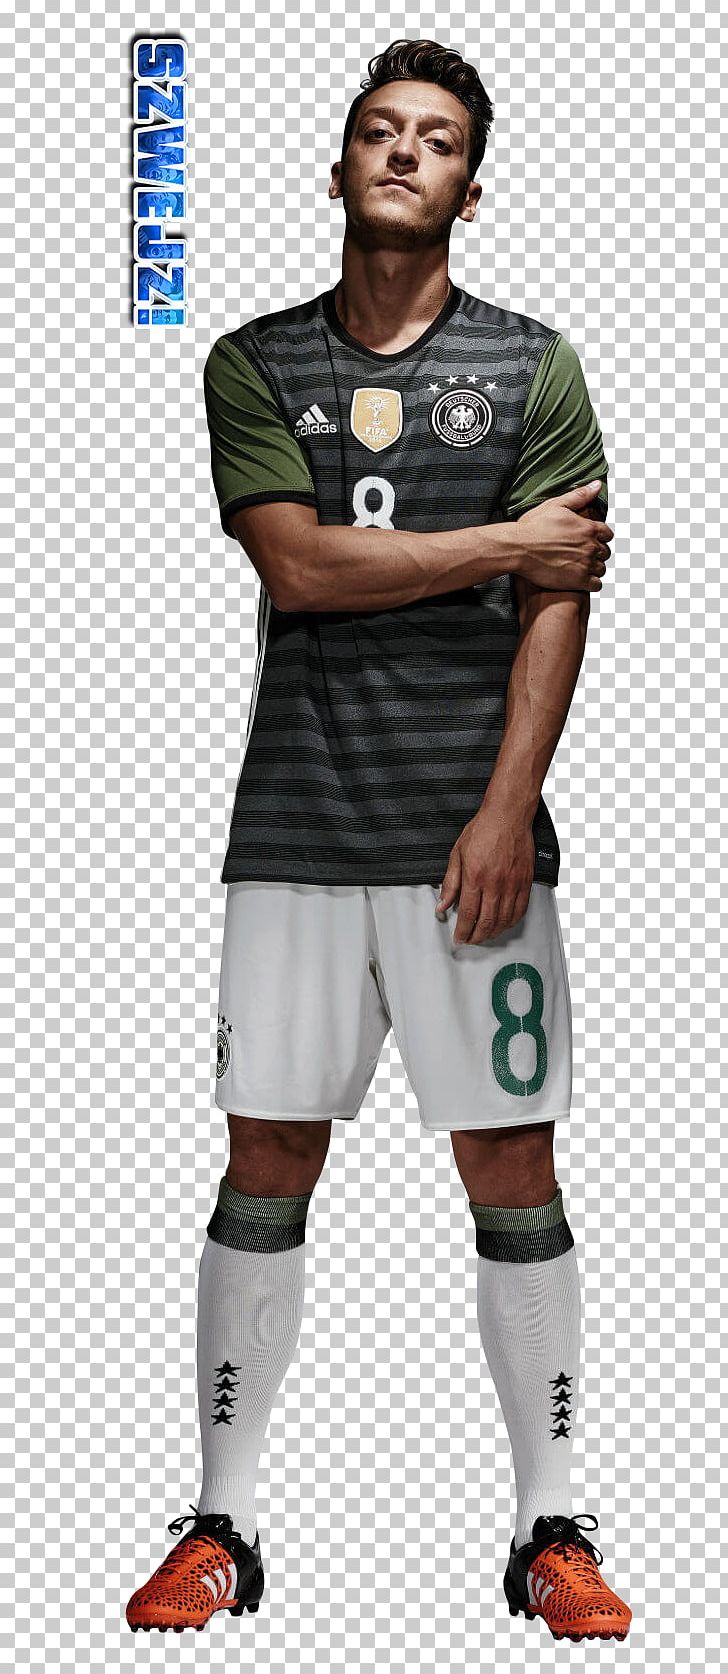 Mesut Özil Soccer Player Football Player Sport PNG, Clipart, Baseball, Baseball Equipment, Clothing, Deviantart, Drawing Free PNG Download